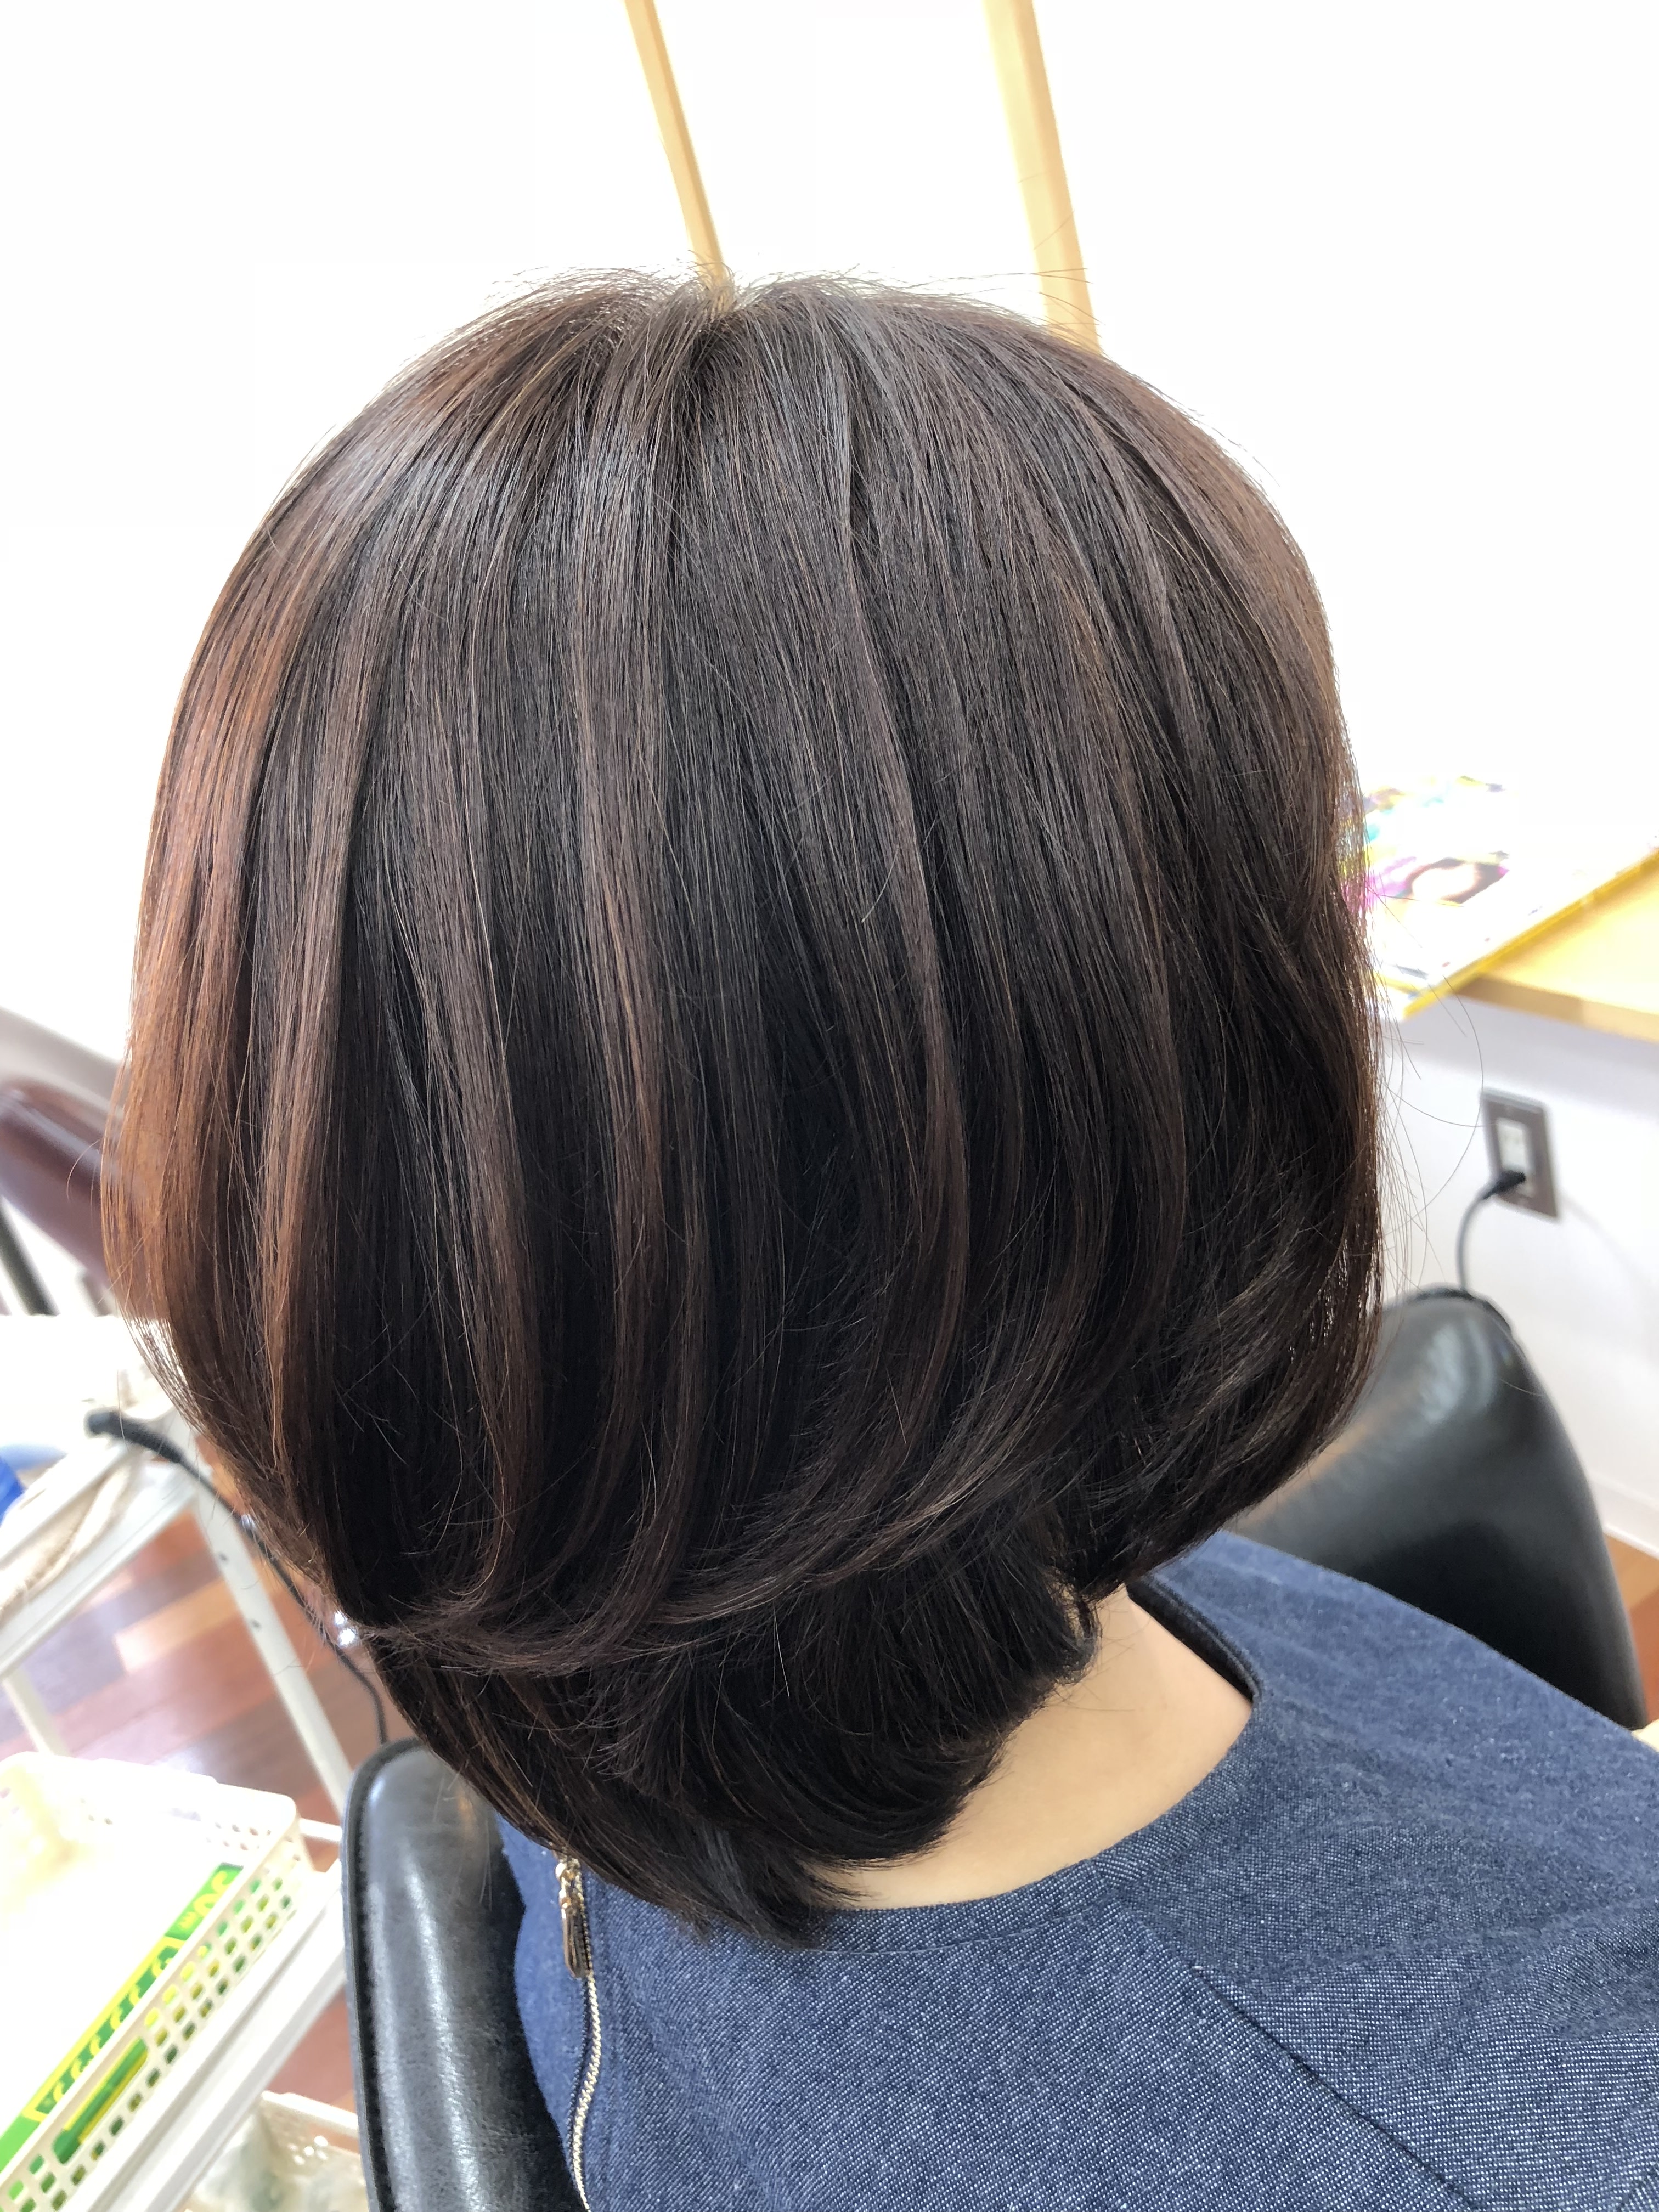 hair salon nita【ヘアーサロン ニータ】のスタイル紹介。ショートレイヤー